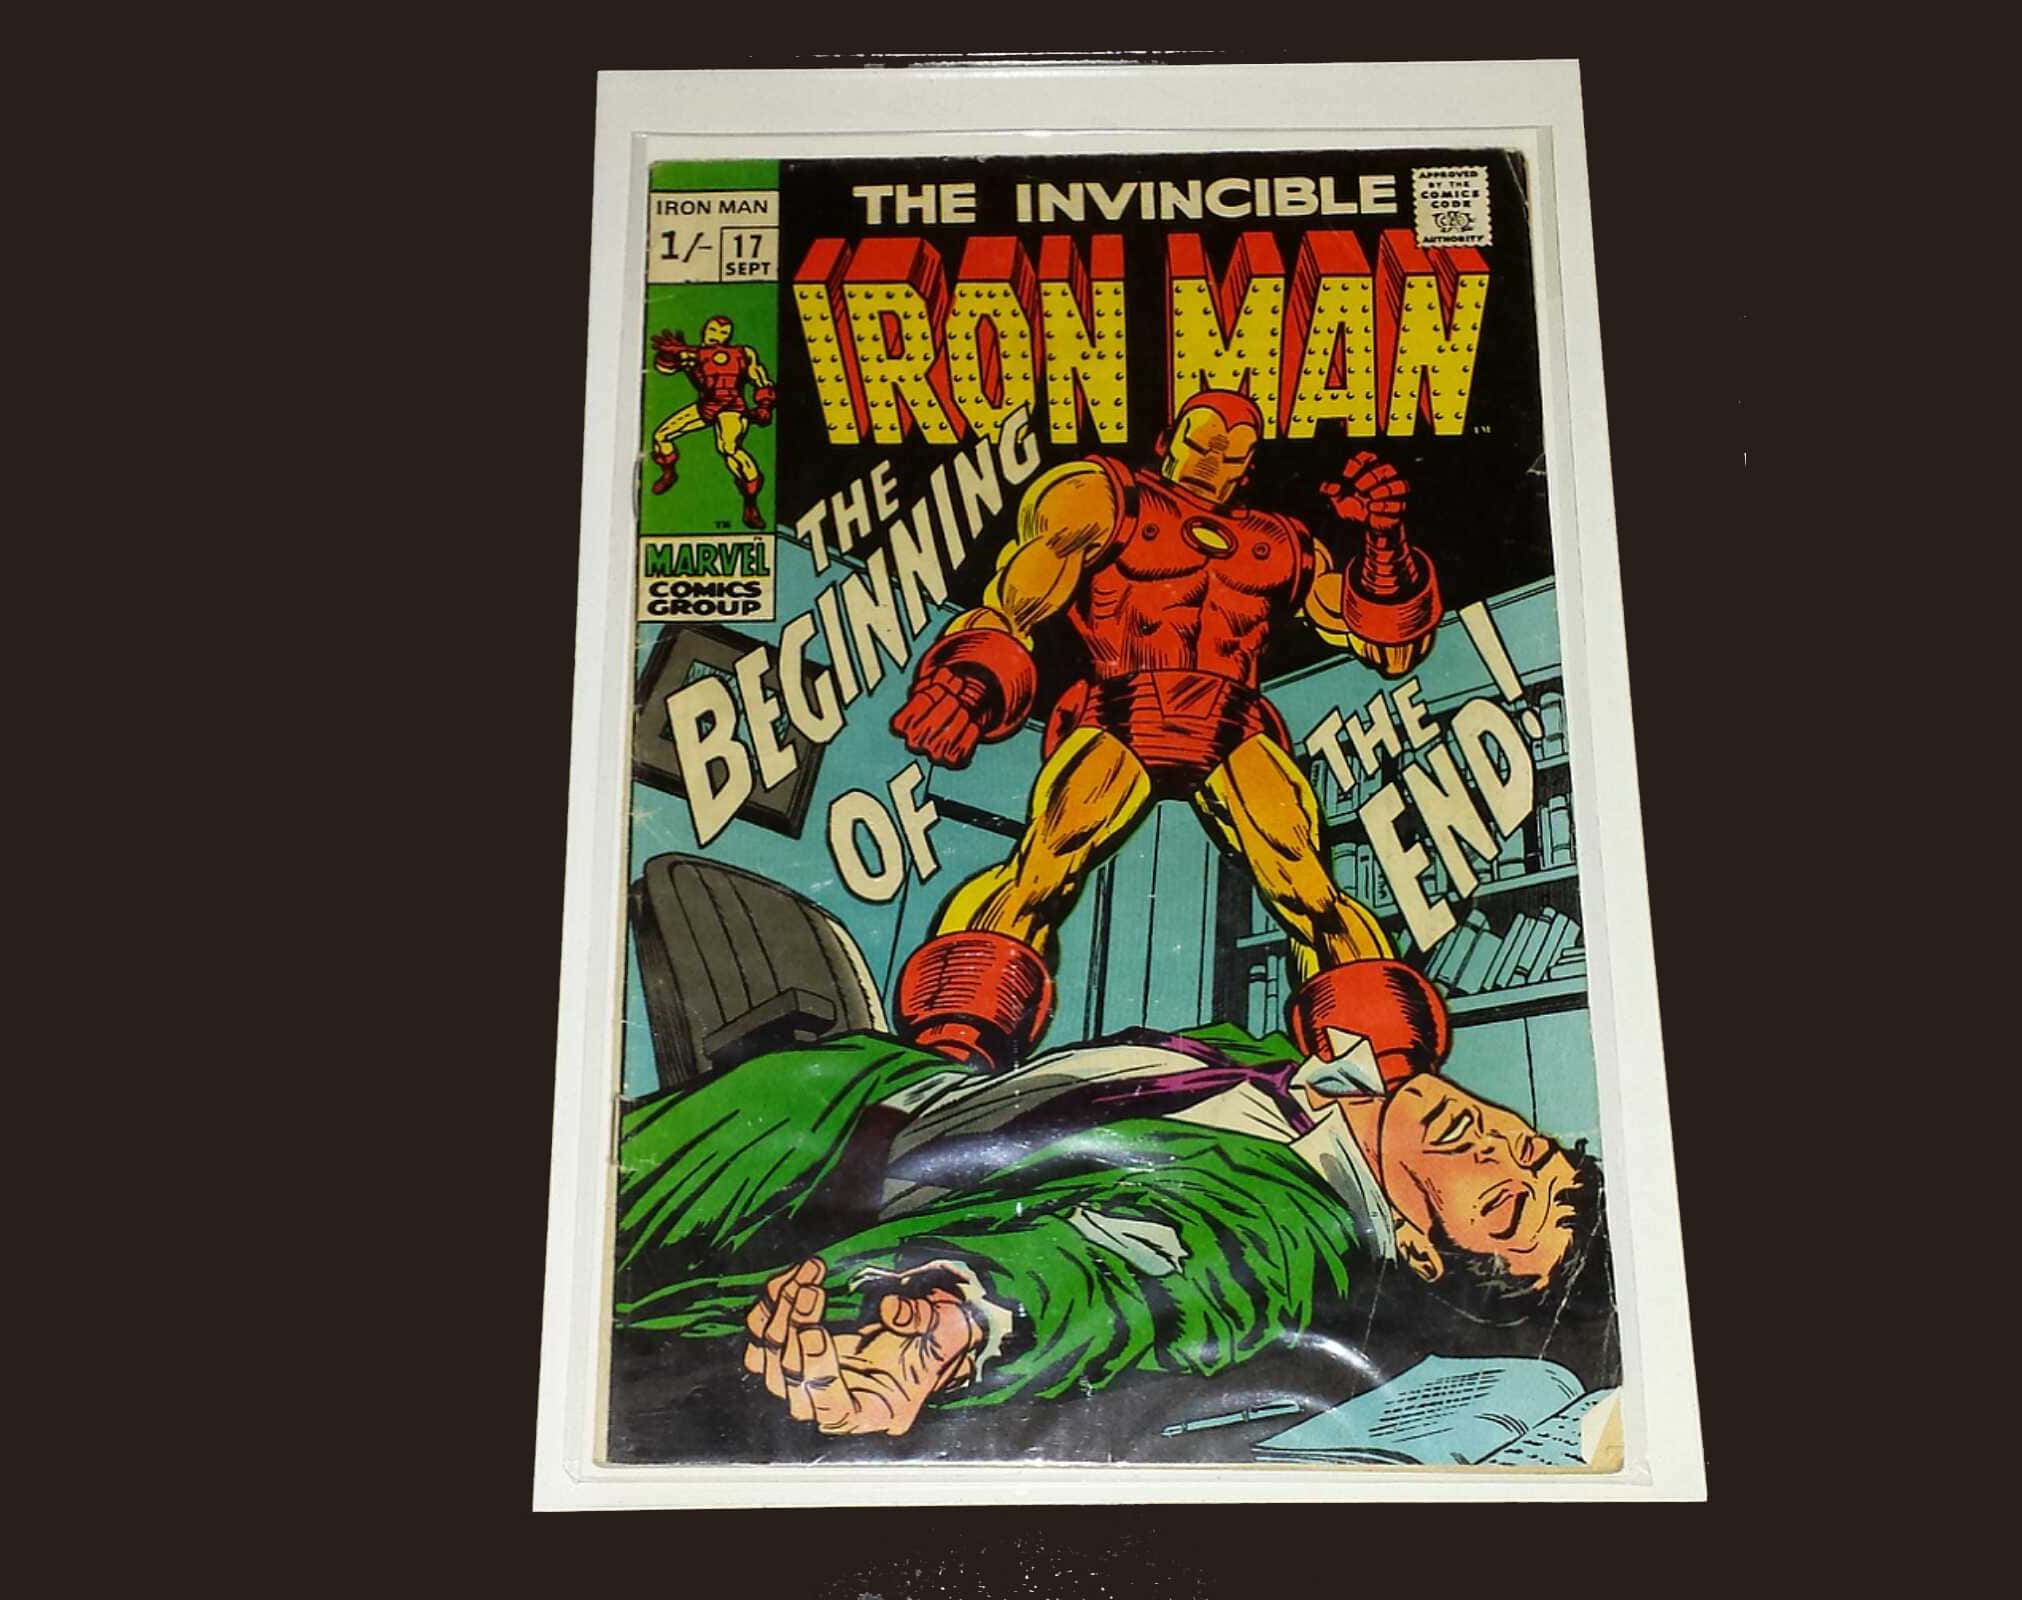 Iron Man facts